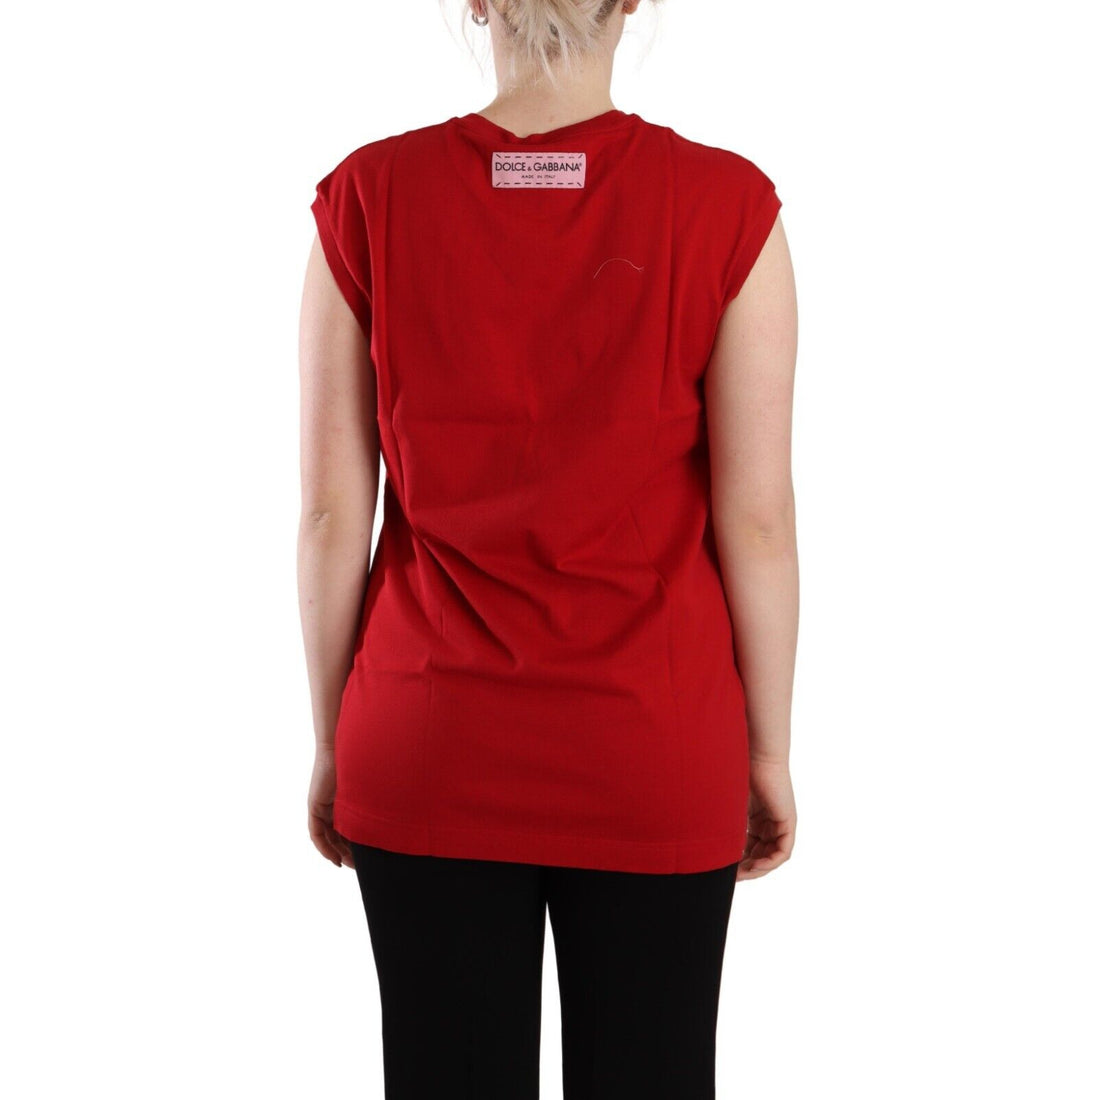 Dolce & Gabbana Red Cotton Sleeveless Crewneck T-shirt Tank Top